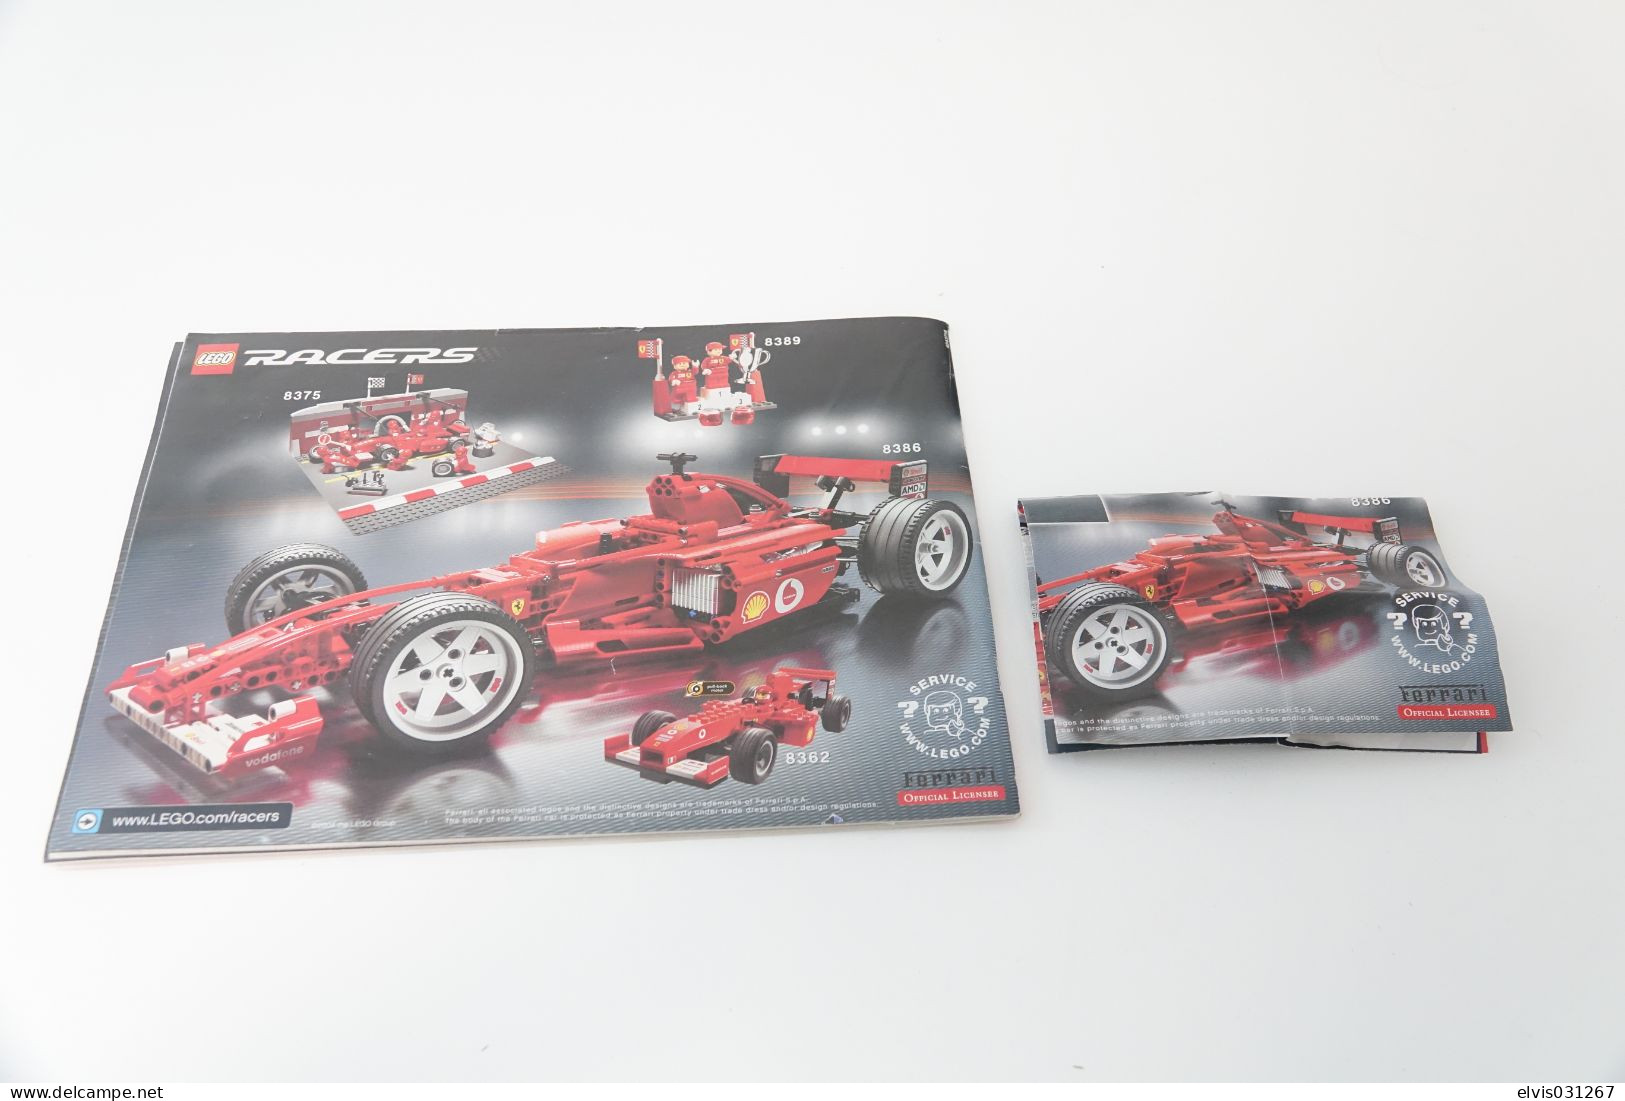 LEGO - 8375 Ferrari F1 Pit Set With Booklet Manual - Original Lego 2004 - Vintage - Catalogi